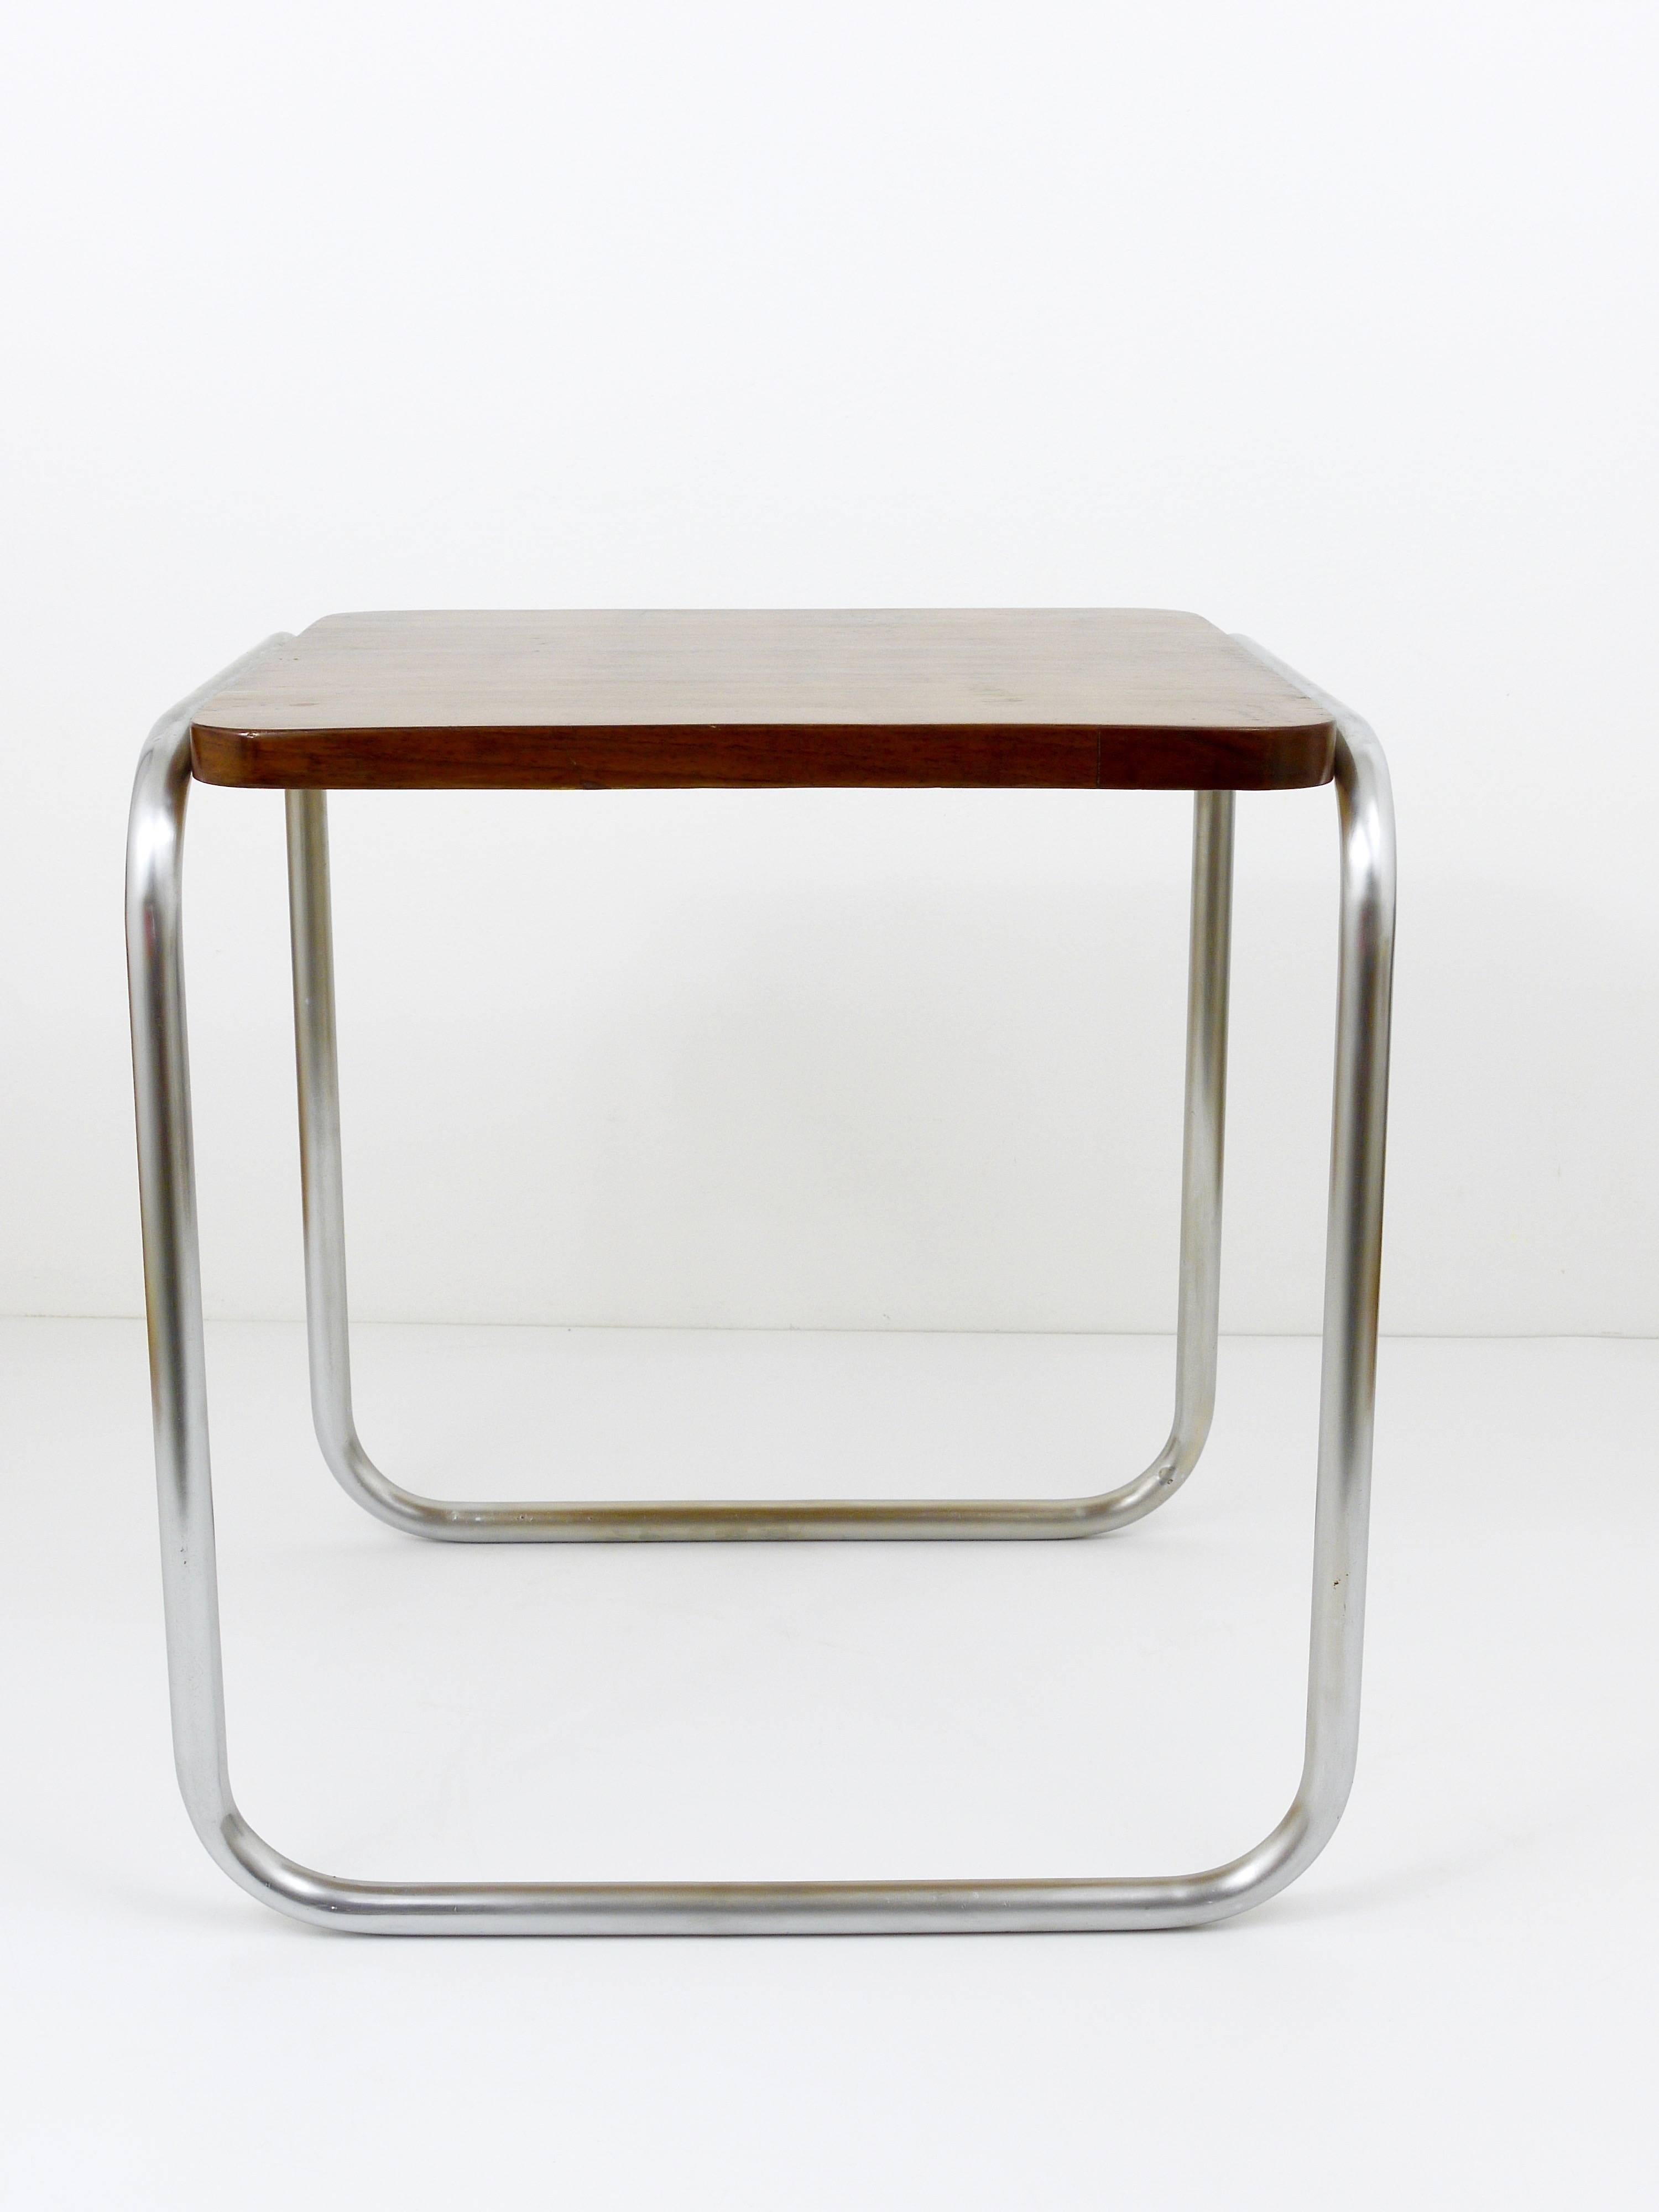 German Bauhaus Tubular Steel Side Table or Stool, 1930s 2